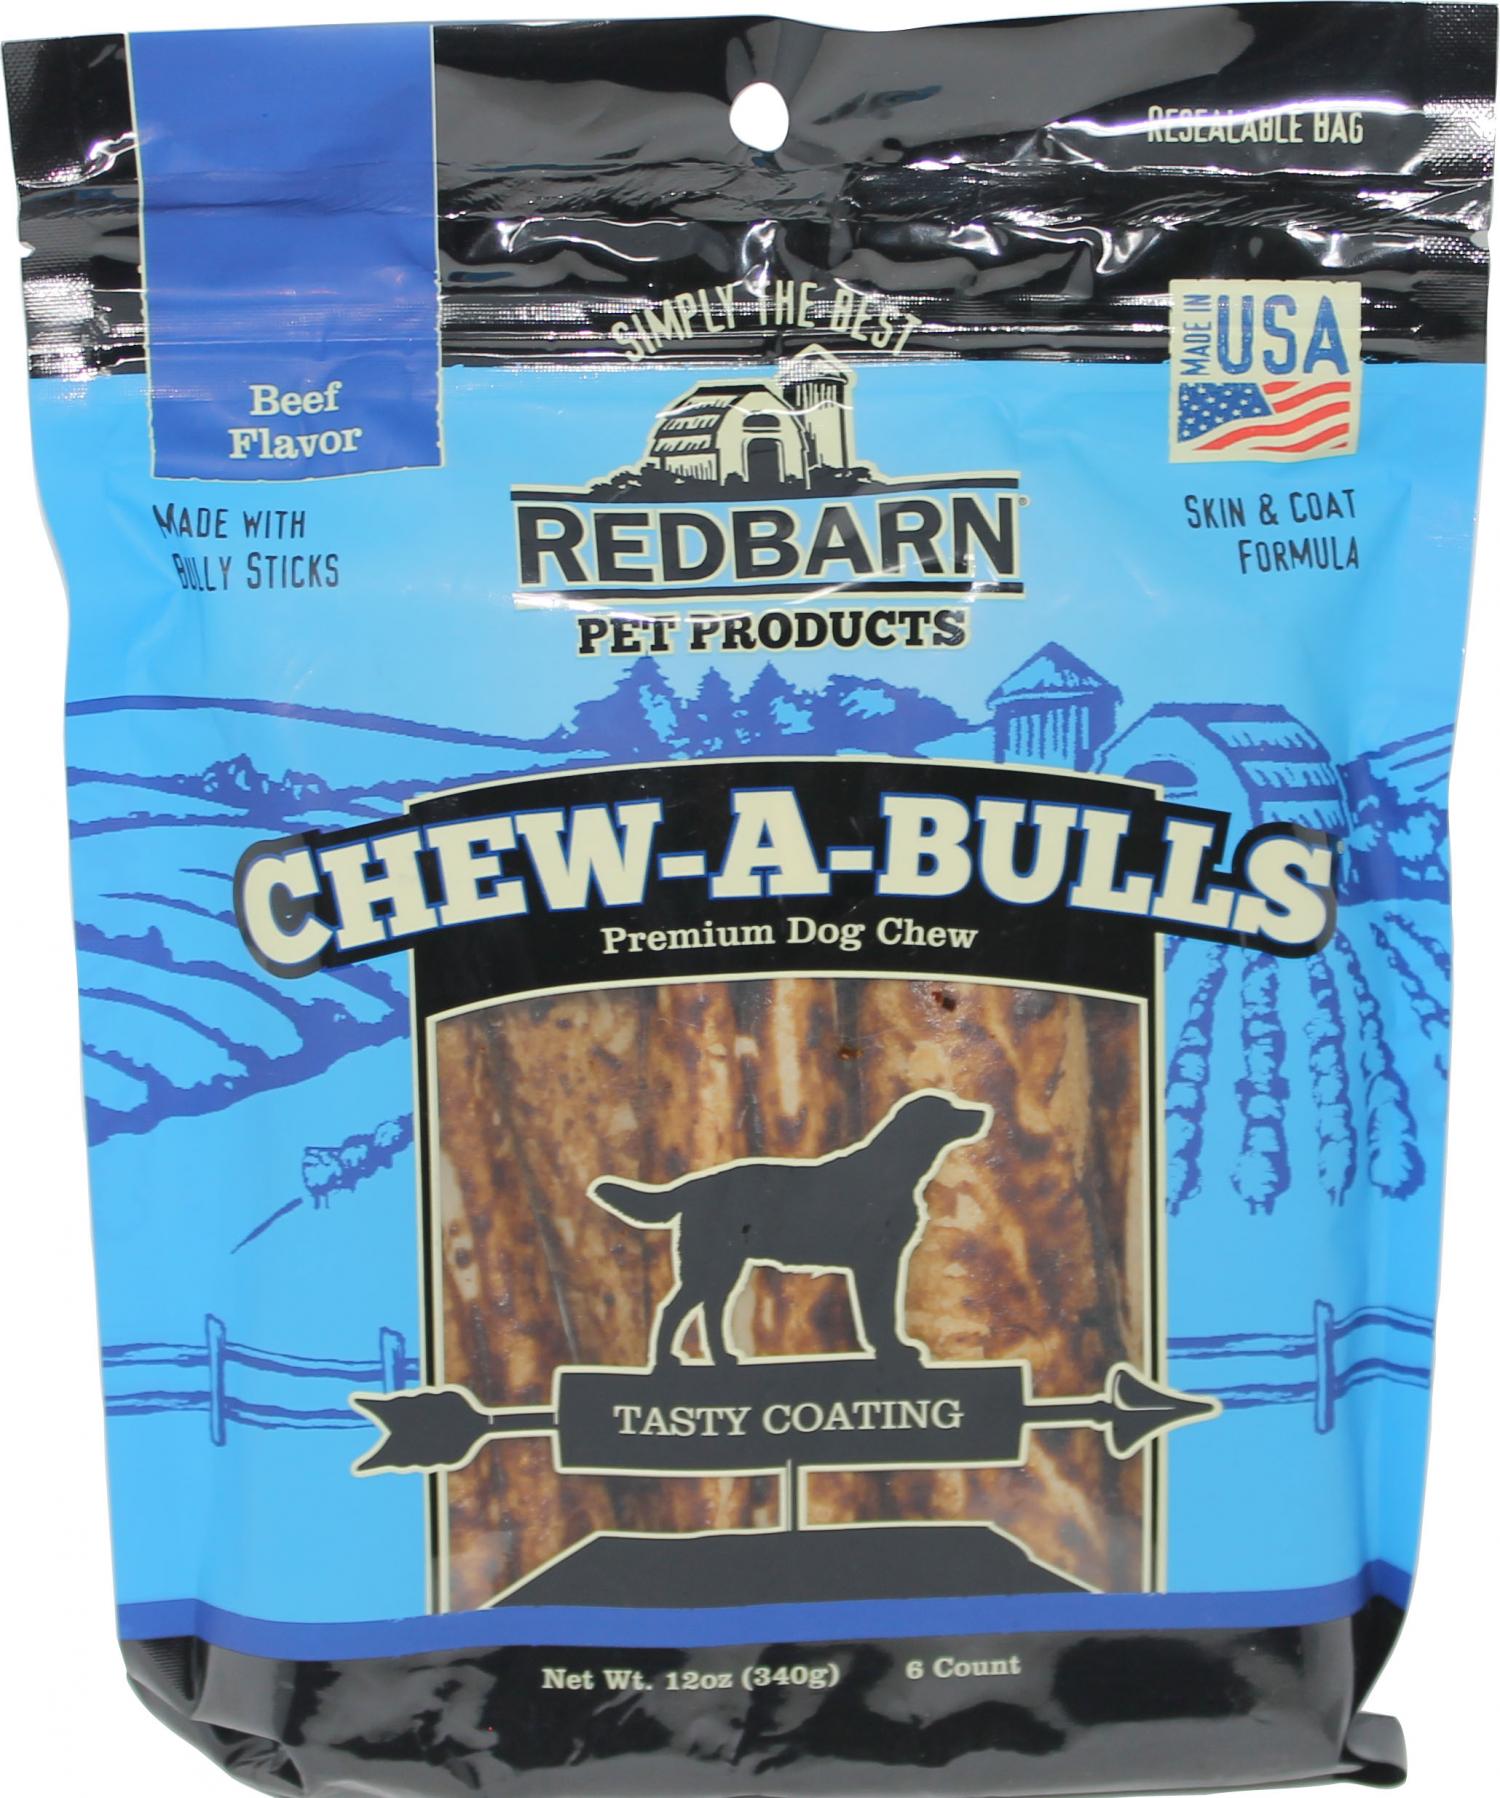 Redbarn Chew-a-bulls Beef Premium Dog Chew, 6 Pack, Beef